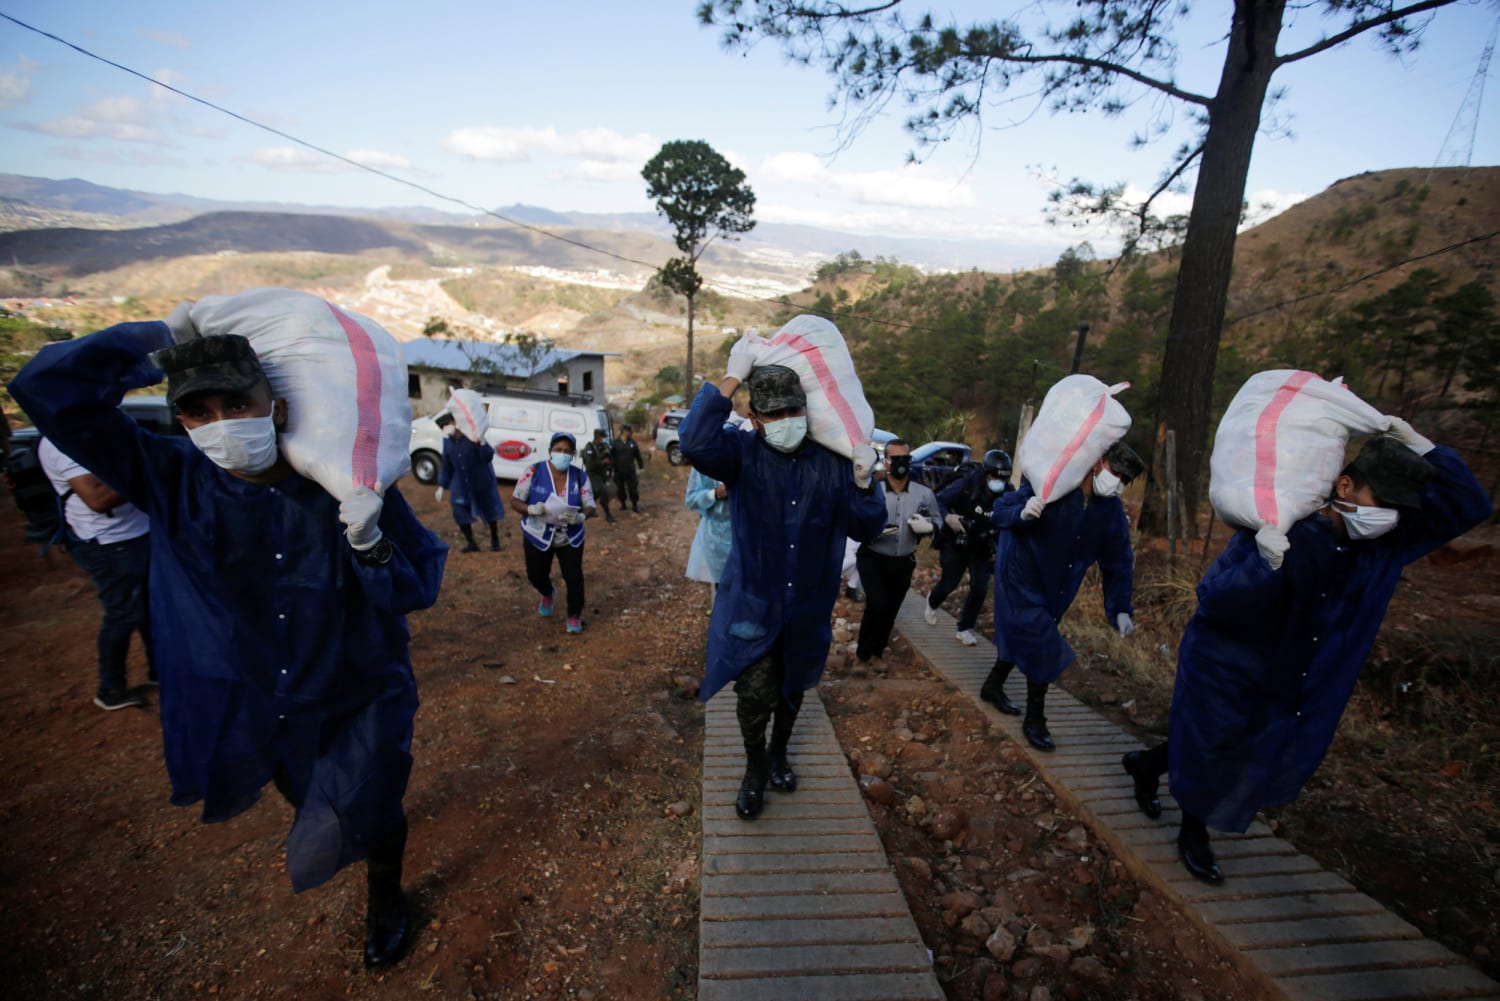 In Honduras, soldiers deliver food to over 3 million in coronavirus lockdown